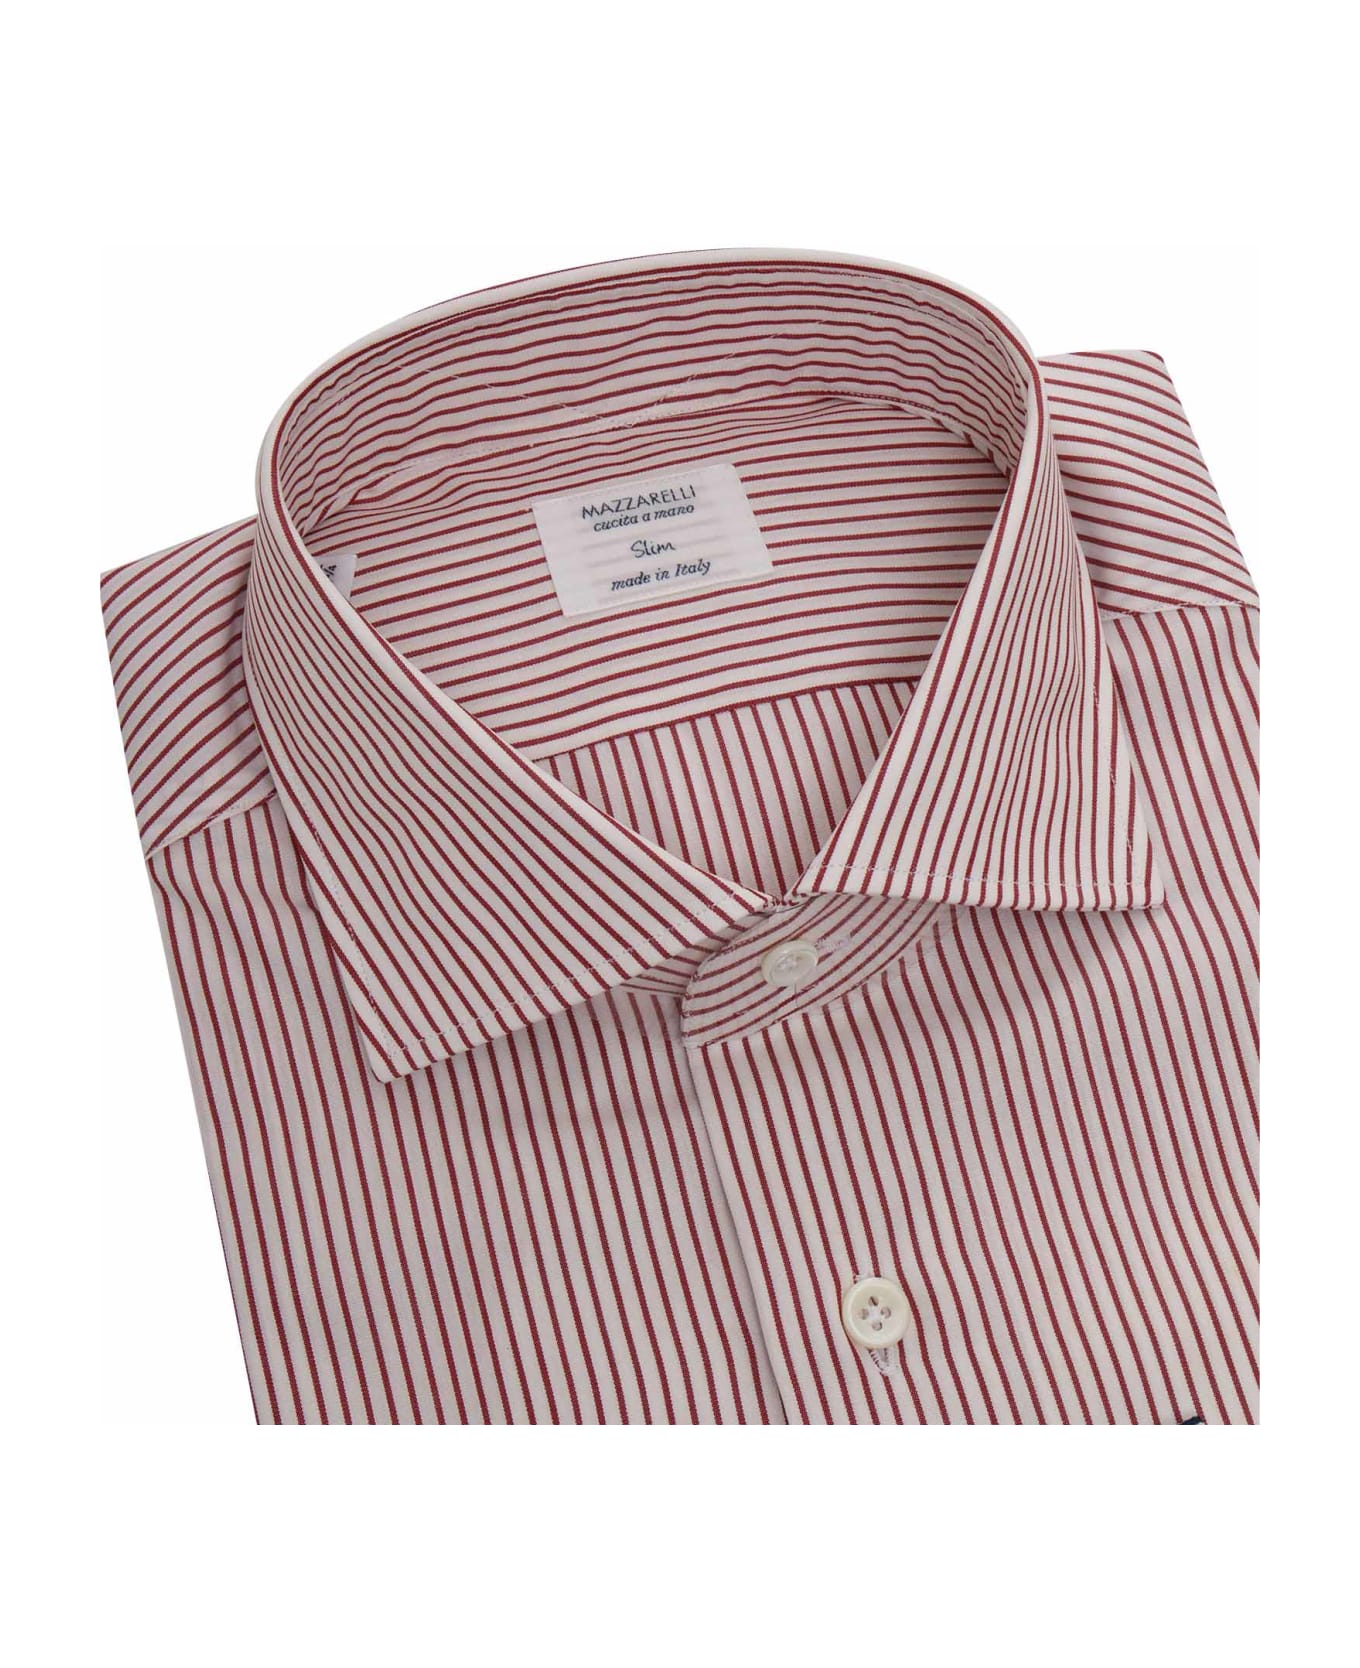 Mazzarelli Red Striped Shirt - WHITE